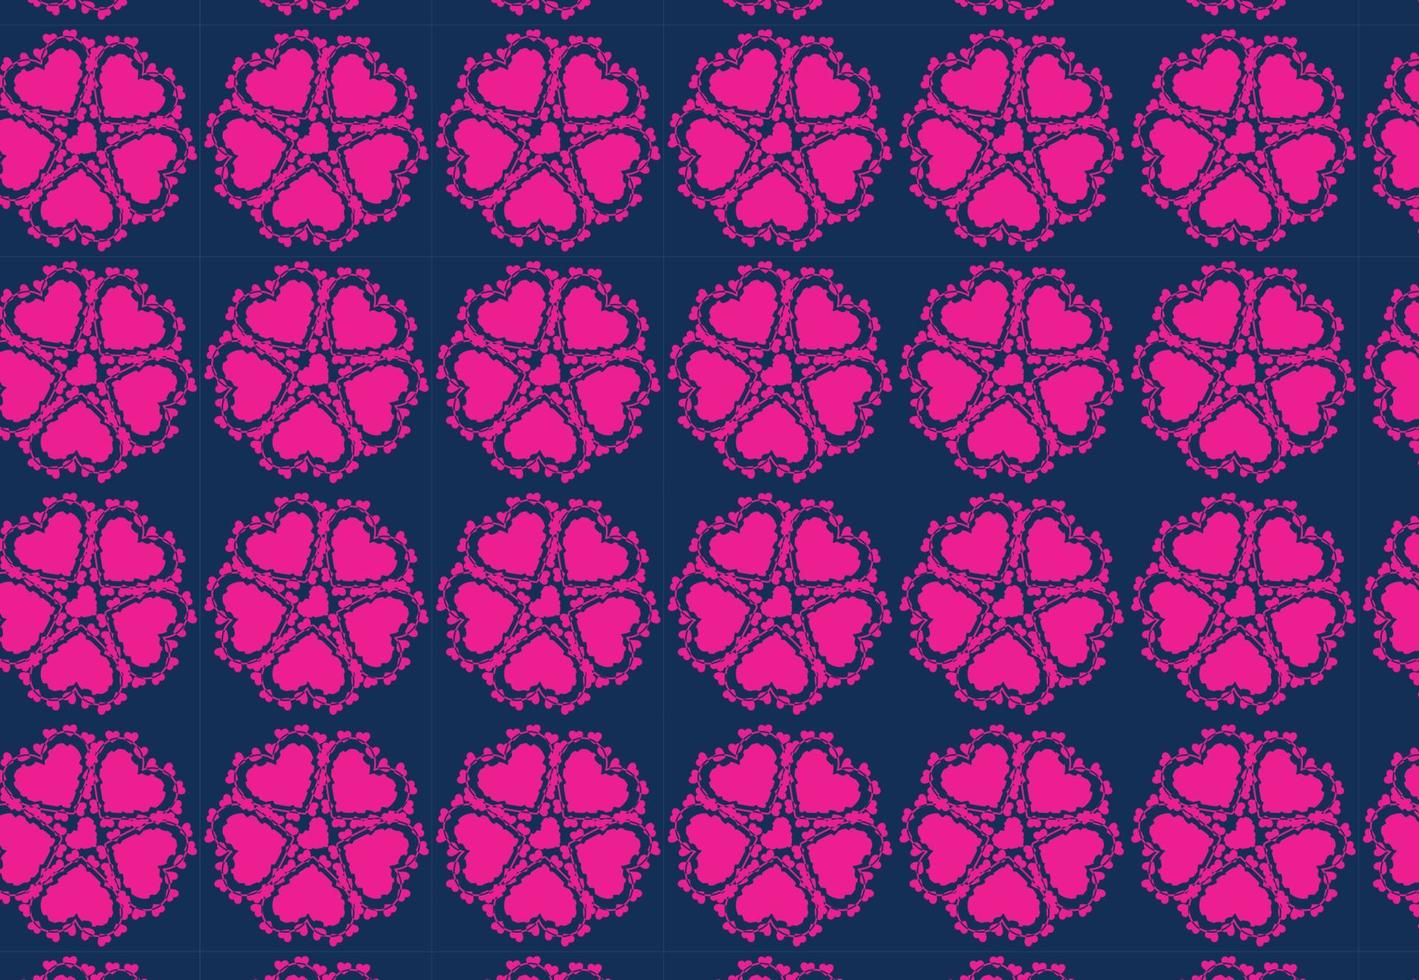 Love heart modern pattern background vector